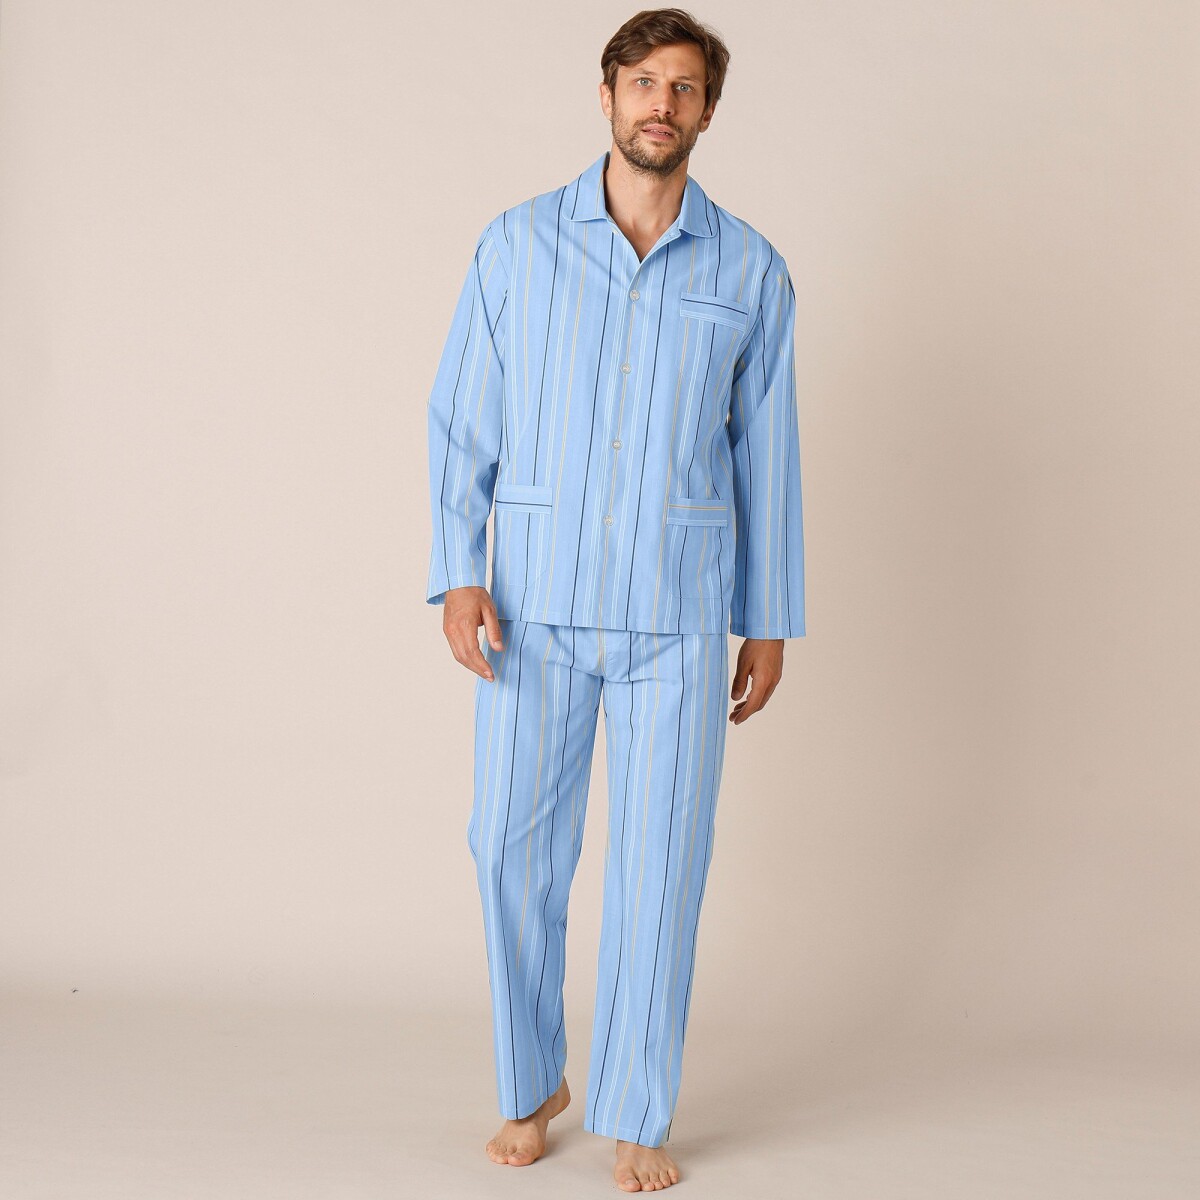 Blancheporte Pruhované pyžamo, popelín modrá 137/146 (4XL)